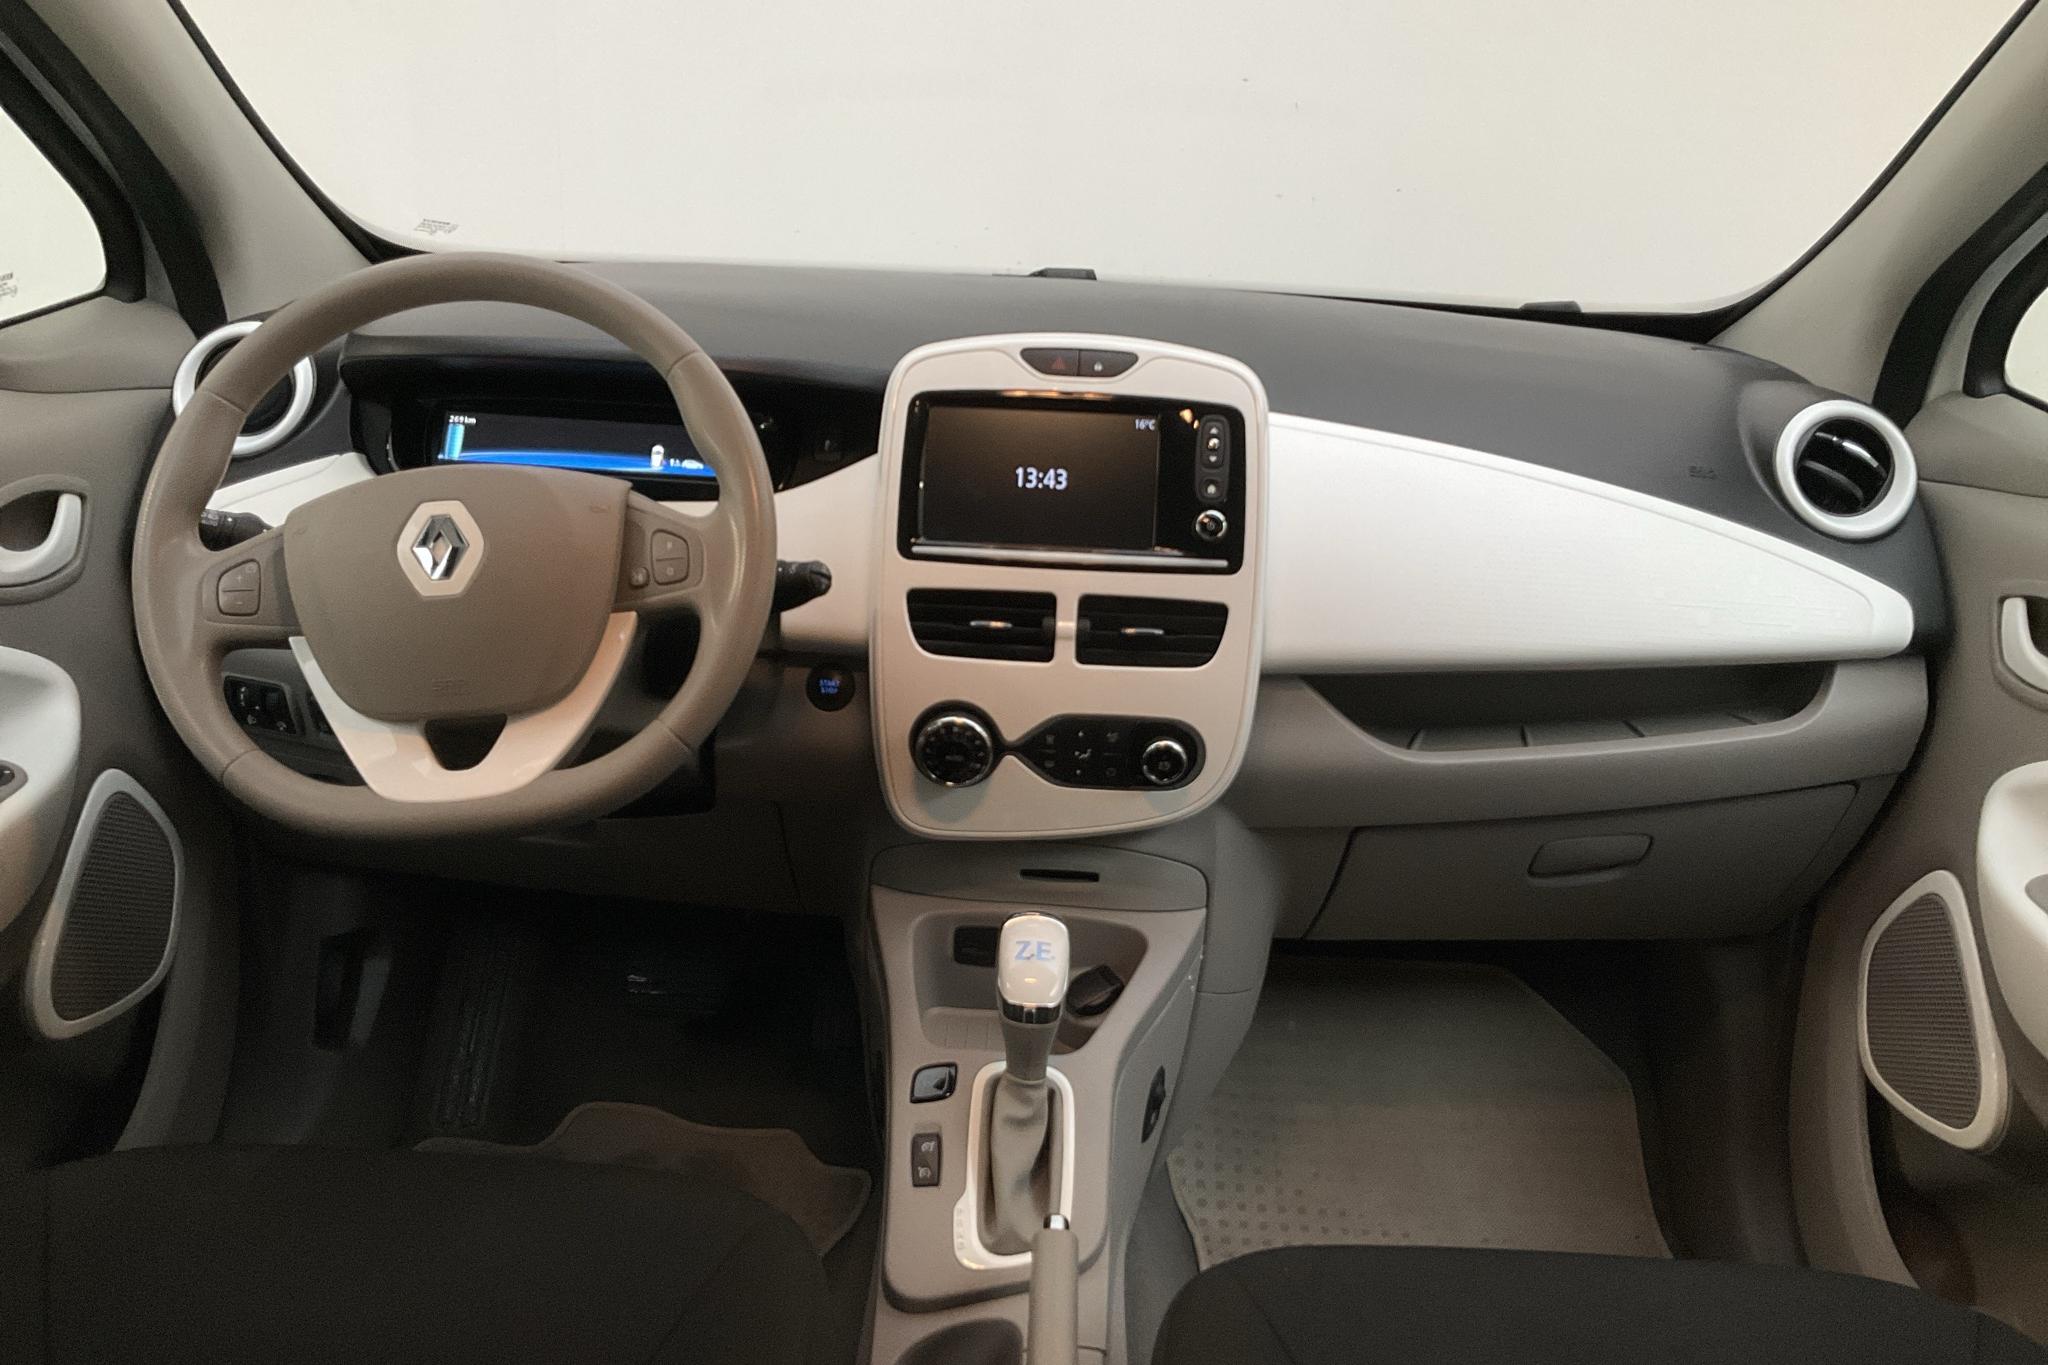 Renault Zoe 41 kWh R90 (92hk) - 39 050 km - Automatic - white - 2018